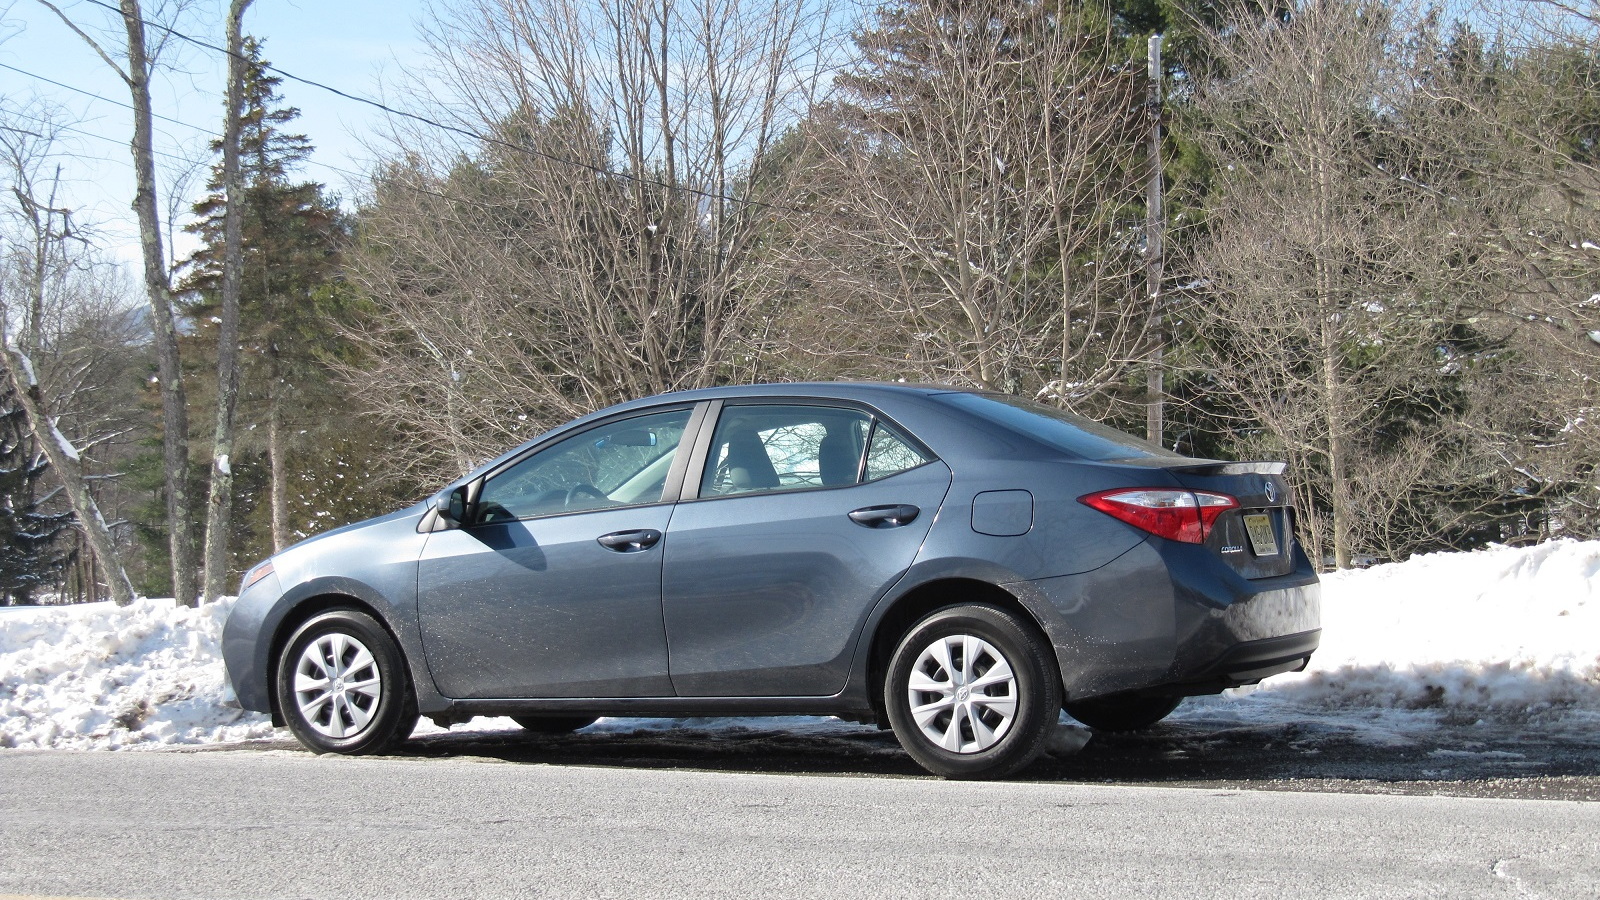 2014 Toyota Corolla LE Eco, Catskill Mountains, NY, Feb 2014